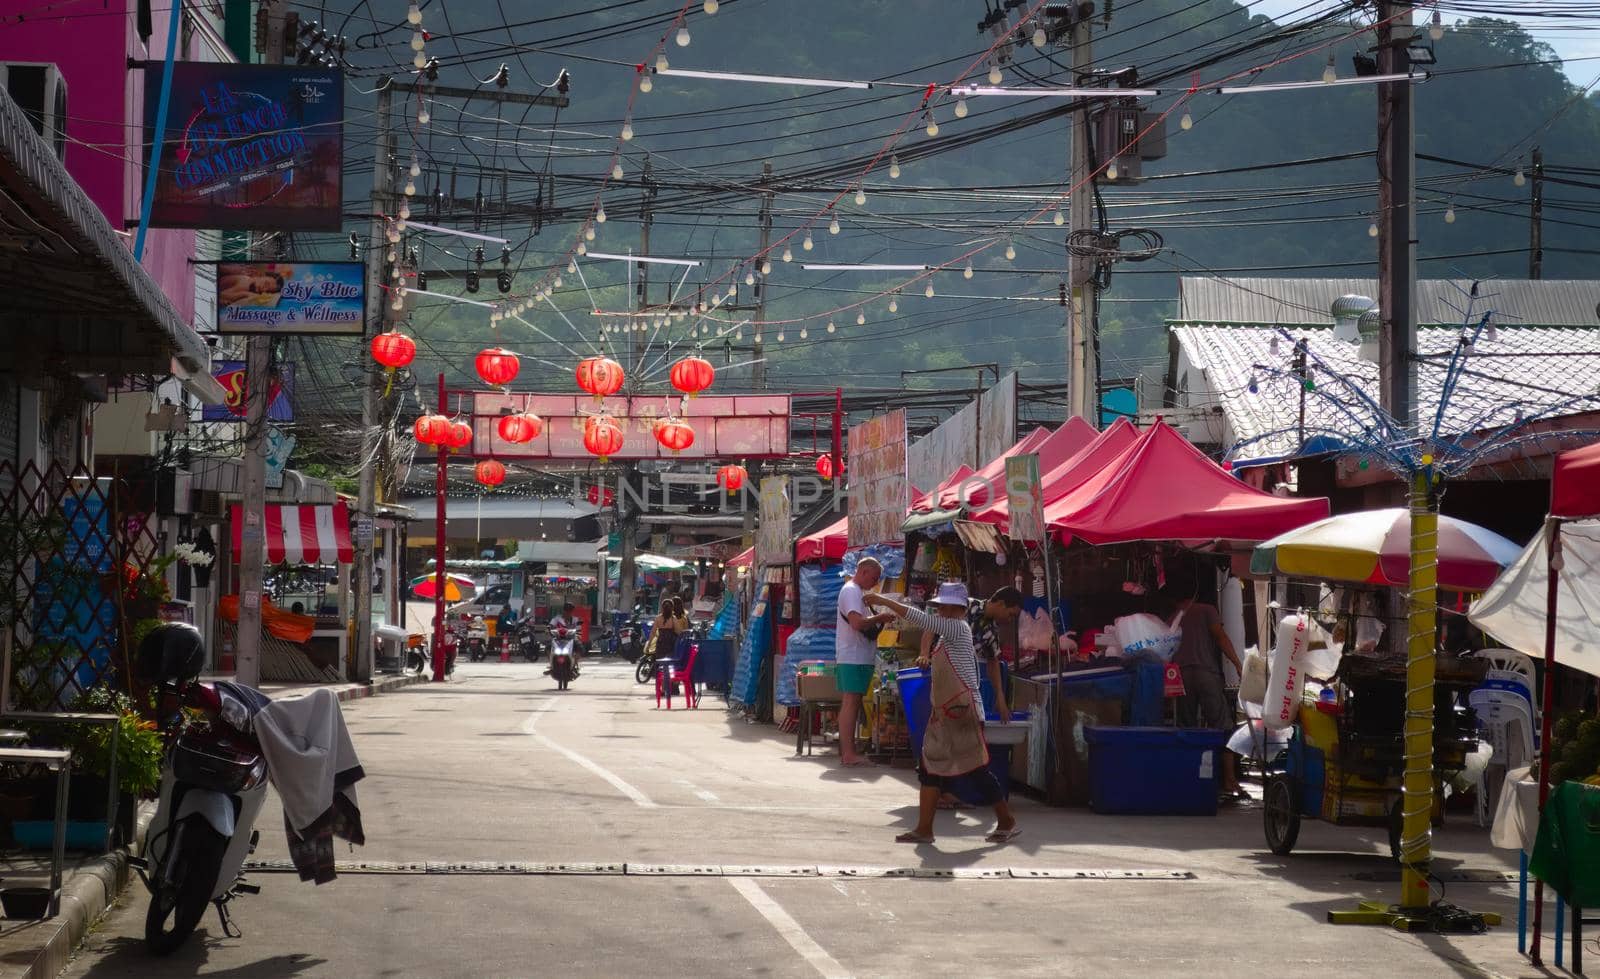 2019-11-05 / Phuket, Thailand - Fresh food street market near Patong Beach.